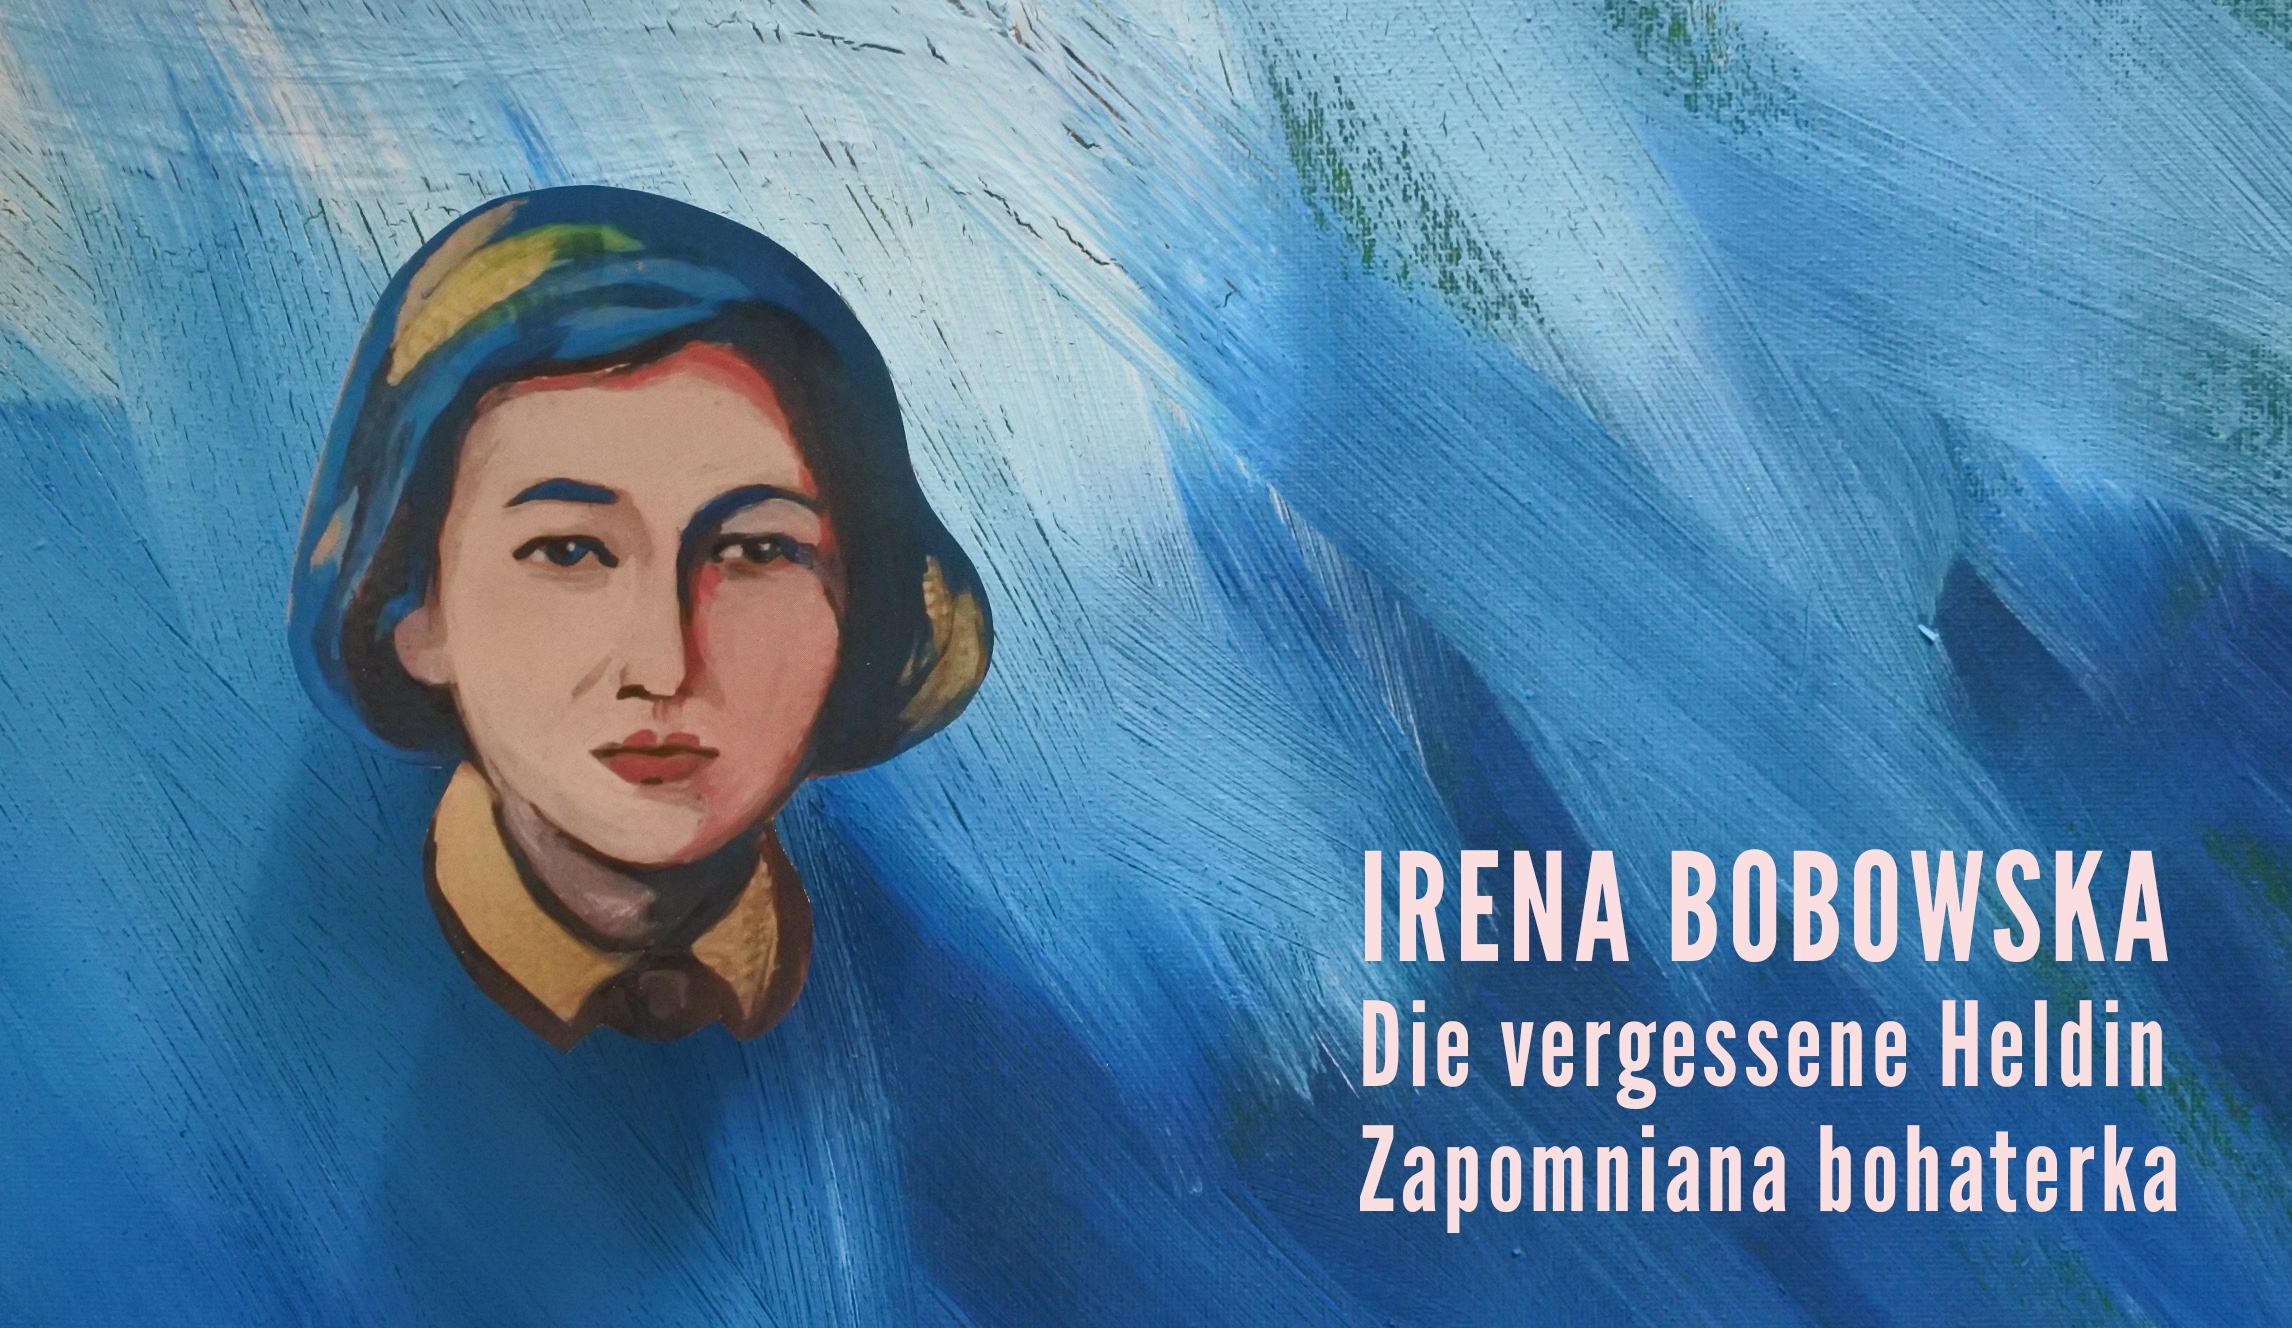 Irena Bobowska, die Vergessene Heldin | Zapomniana Bohaterka